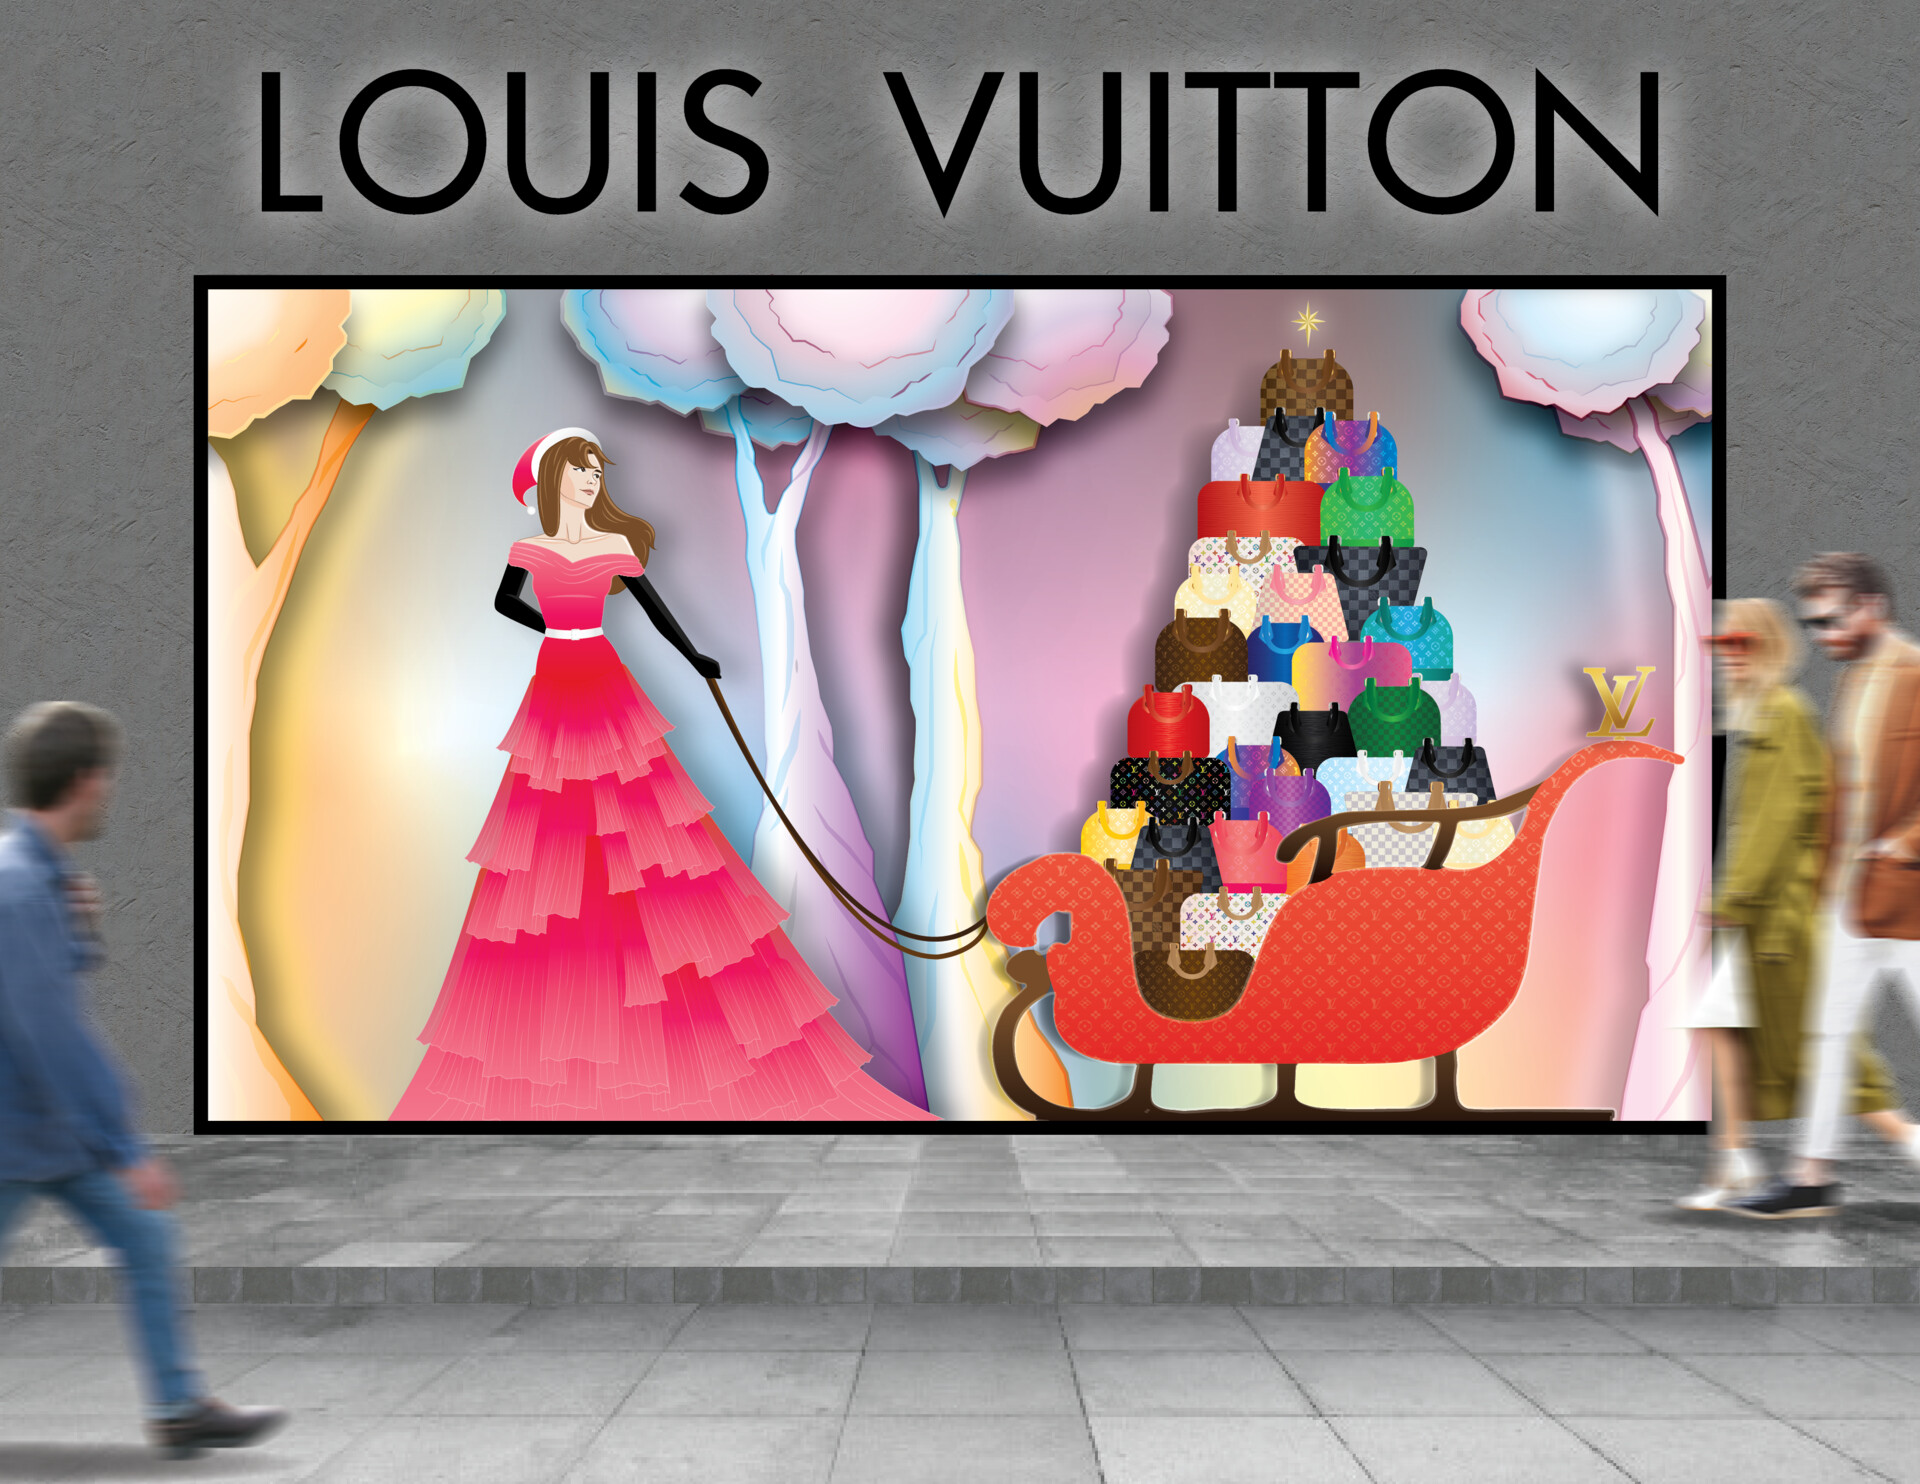 ArtStation - Louis Vuitton Window Display